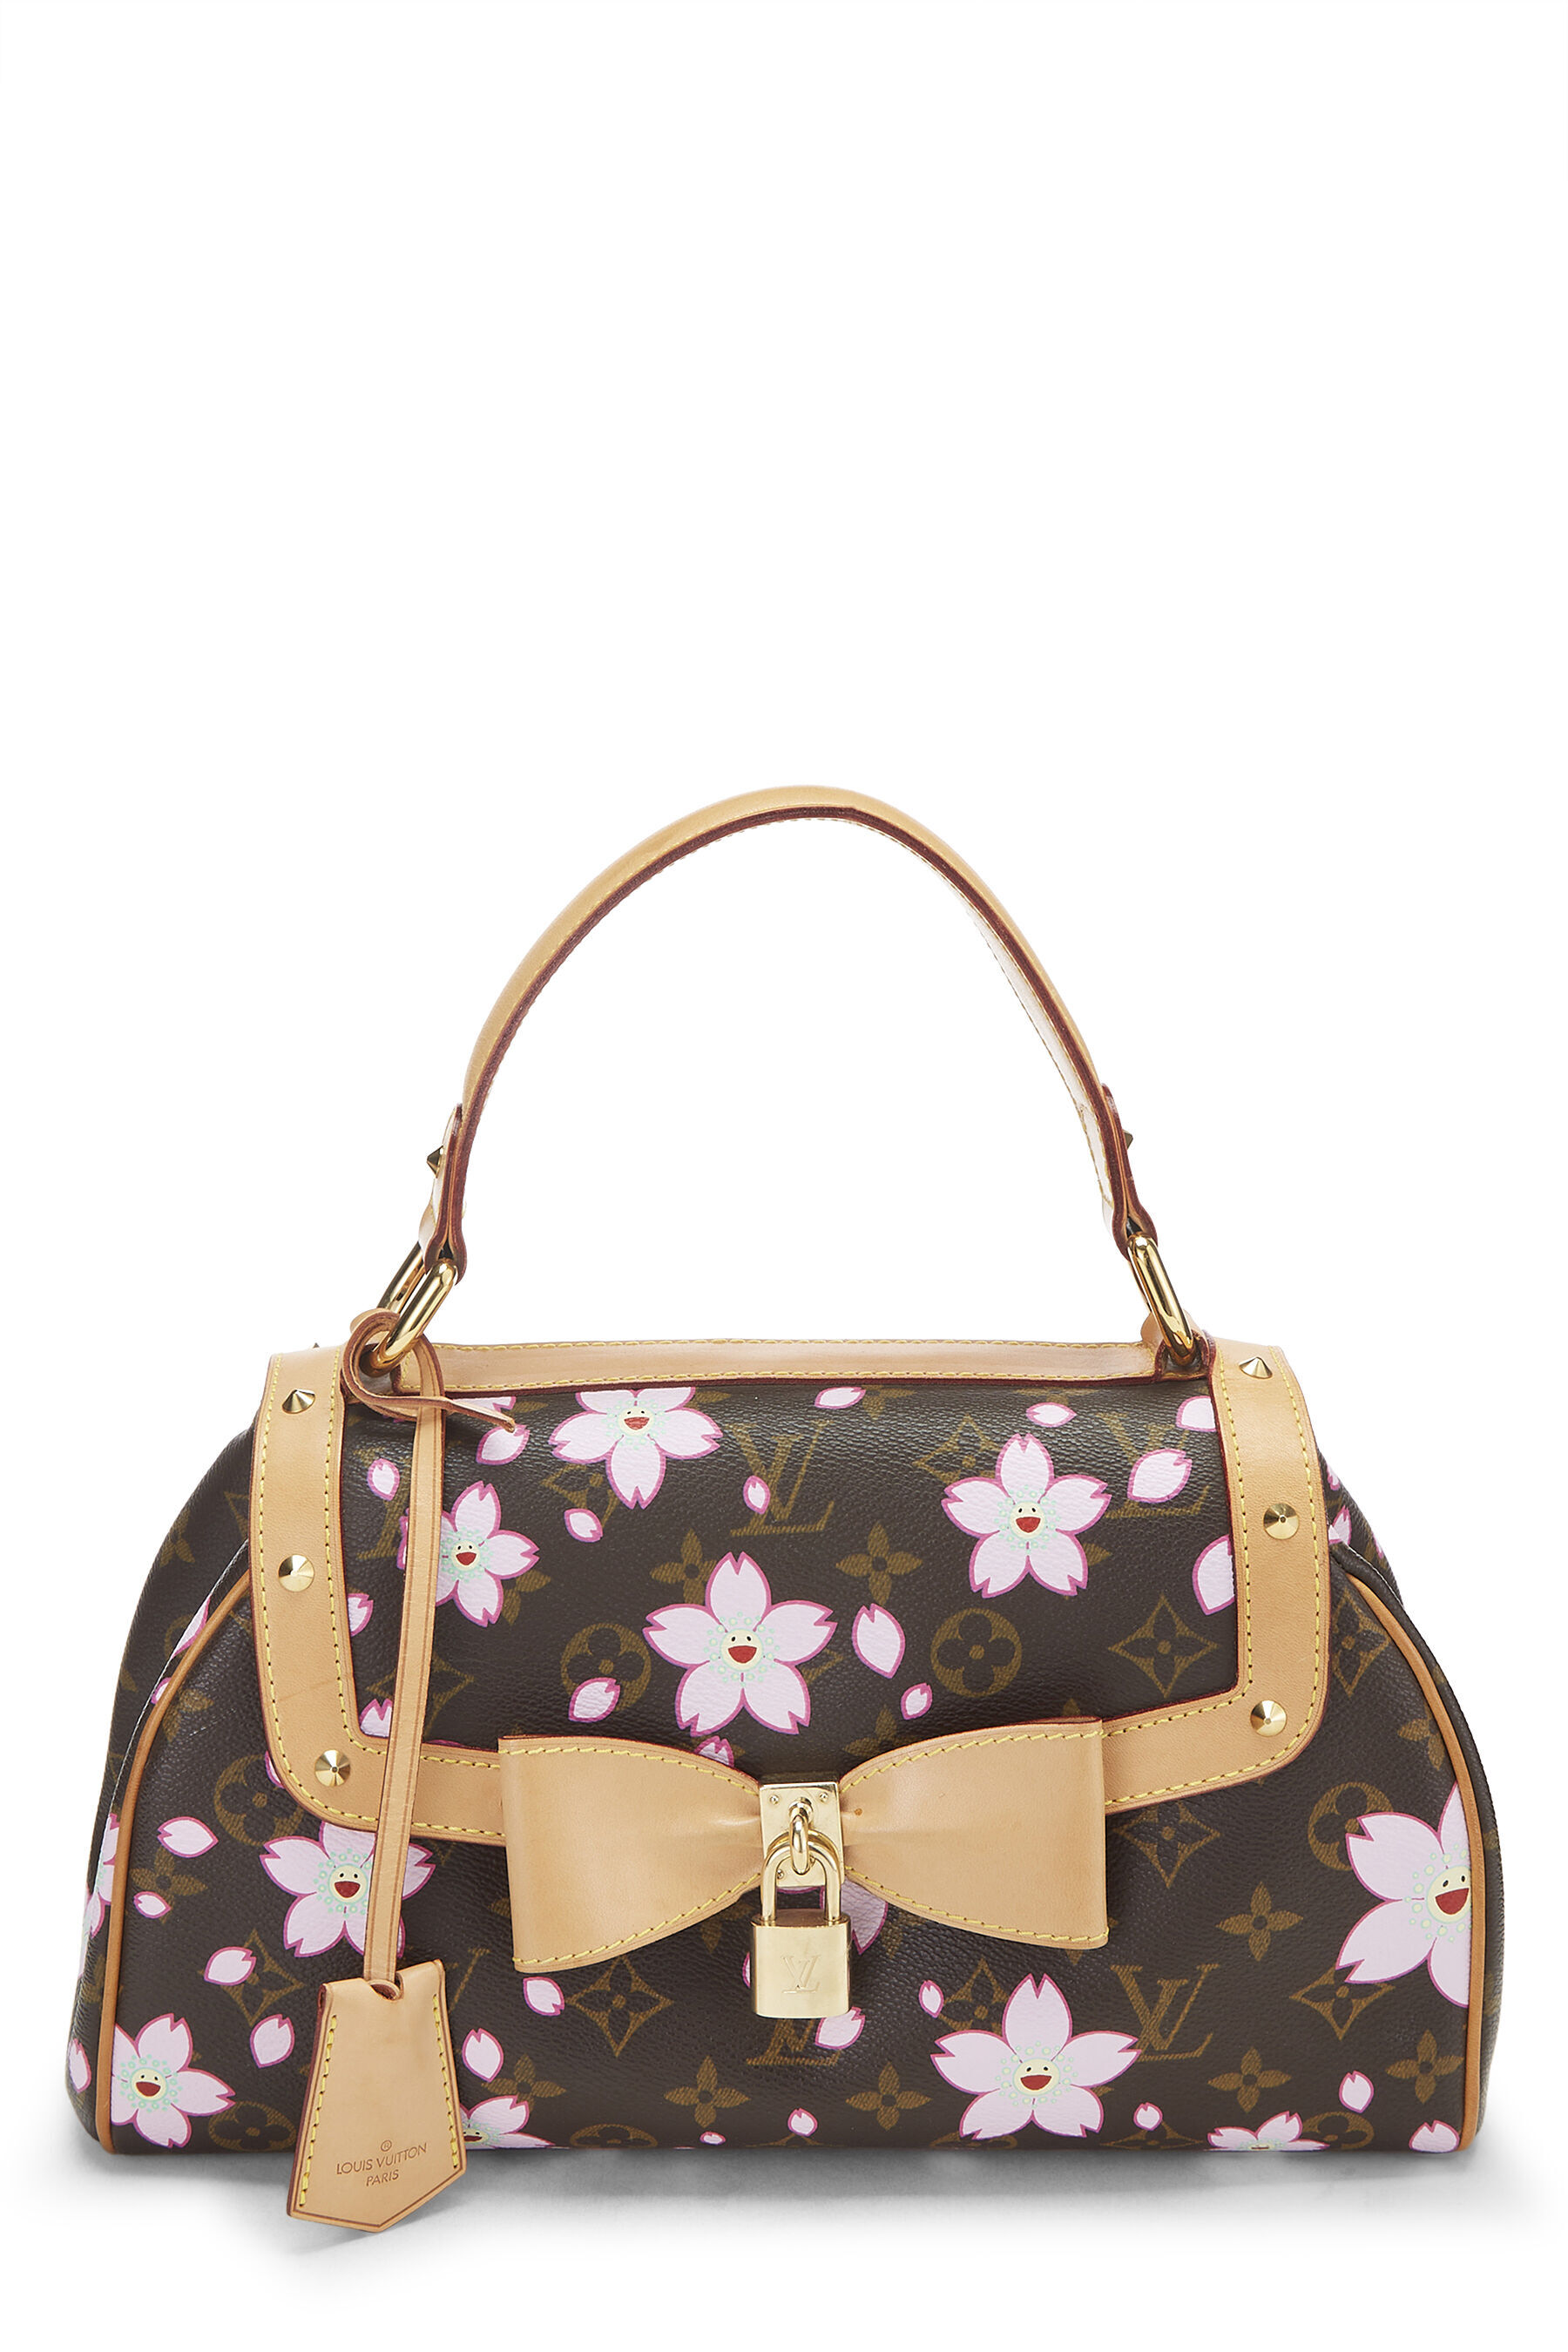 Louis Vuitton x Takashi Murakami Cherry Blossom Sac Retro Bag  myGemma   Item 120355